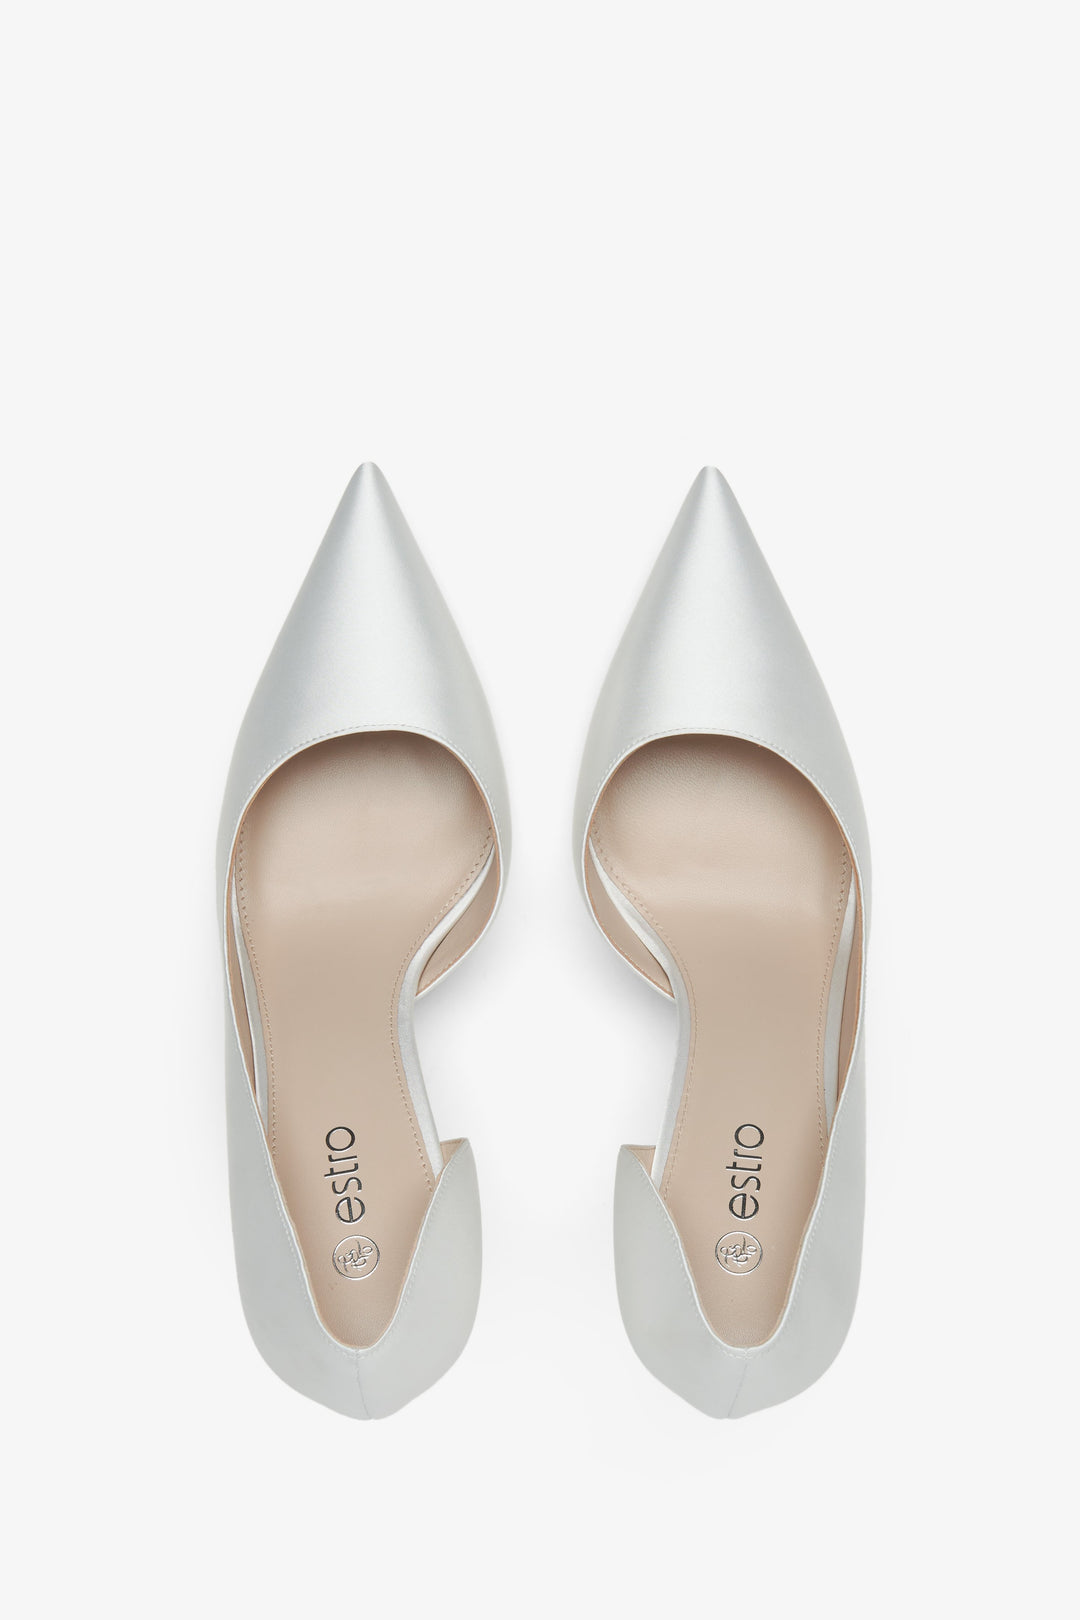 Estro women's milk-white satin high heels - top view model presentation.